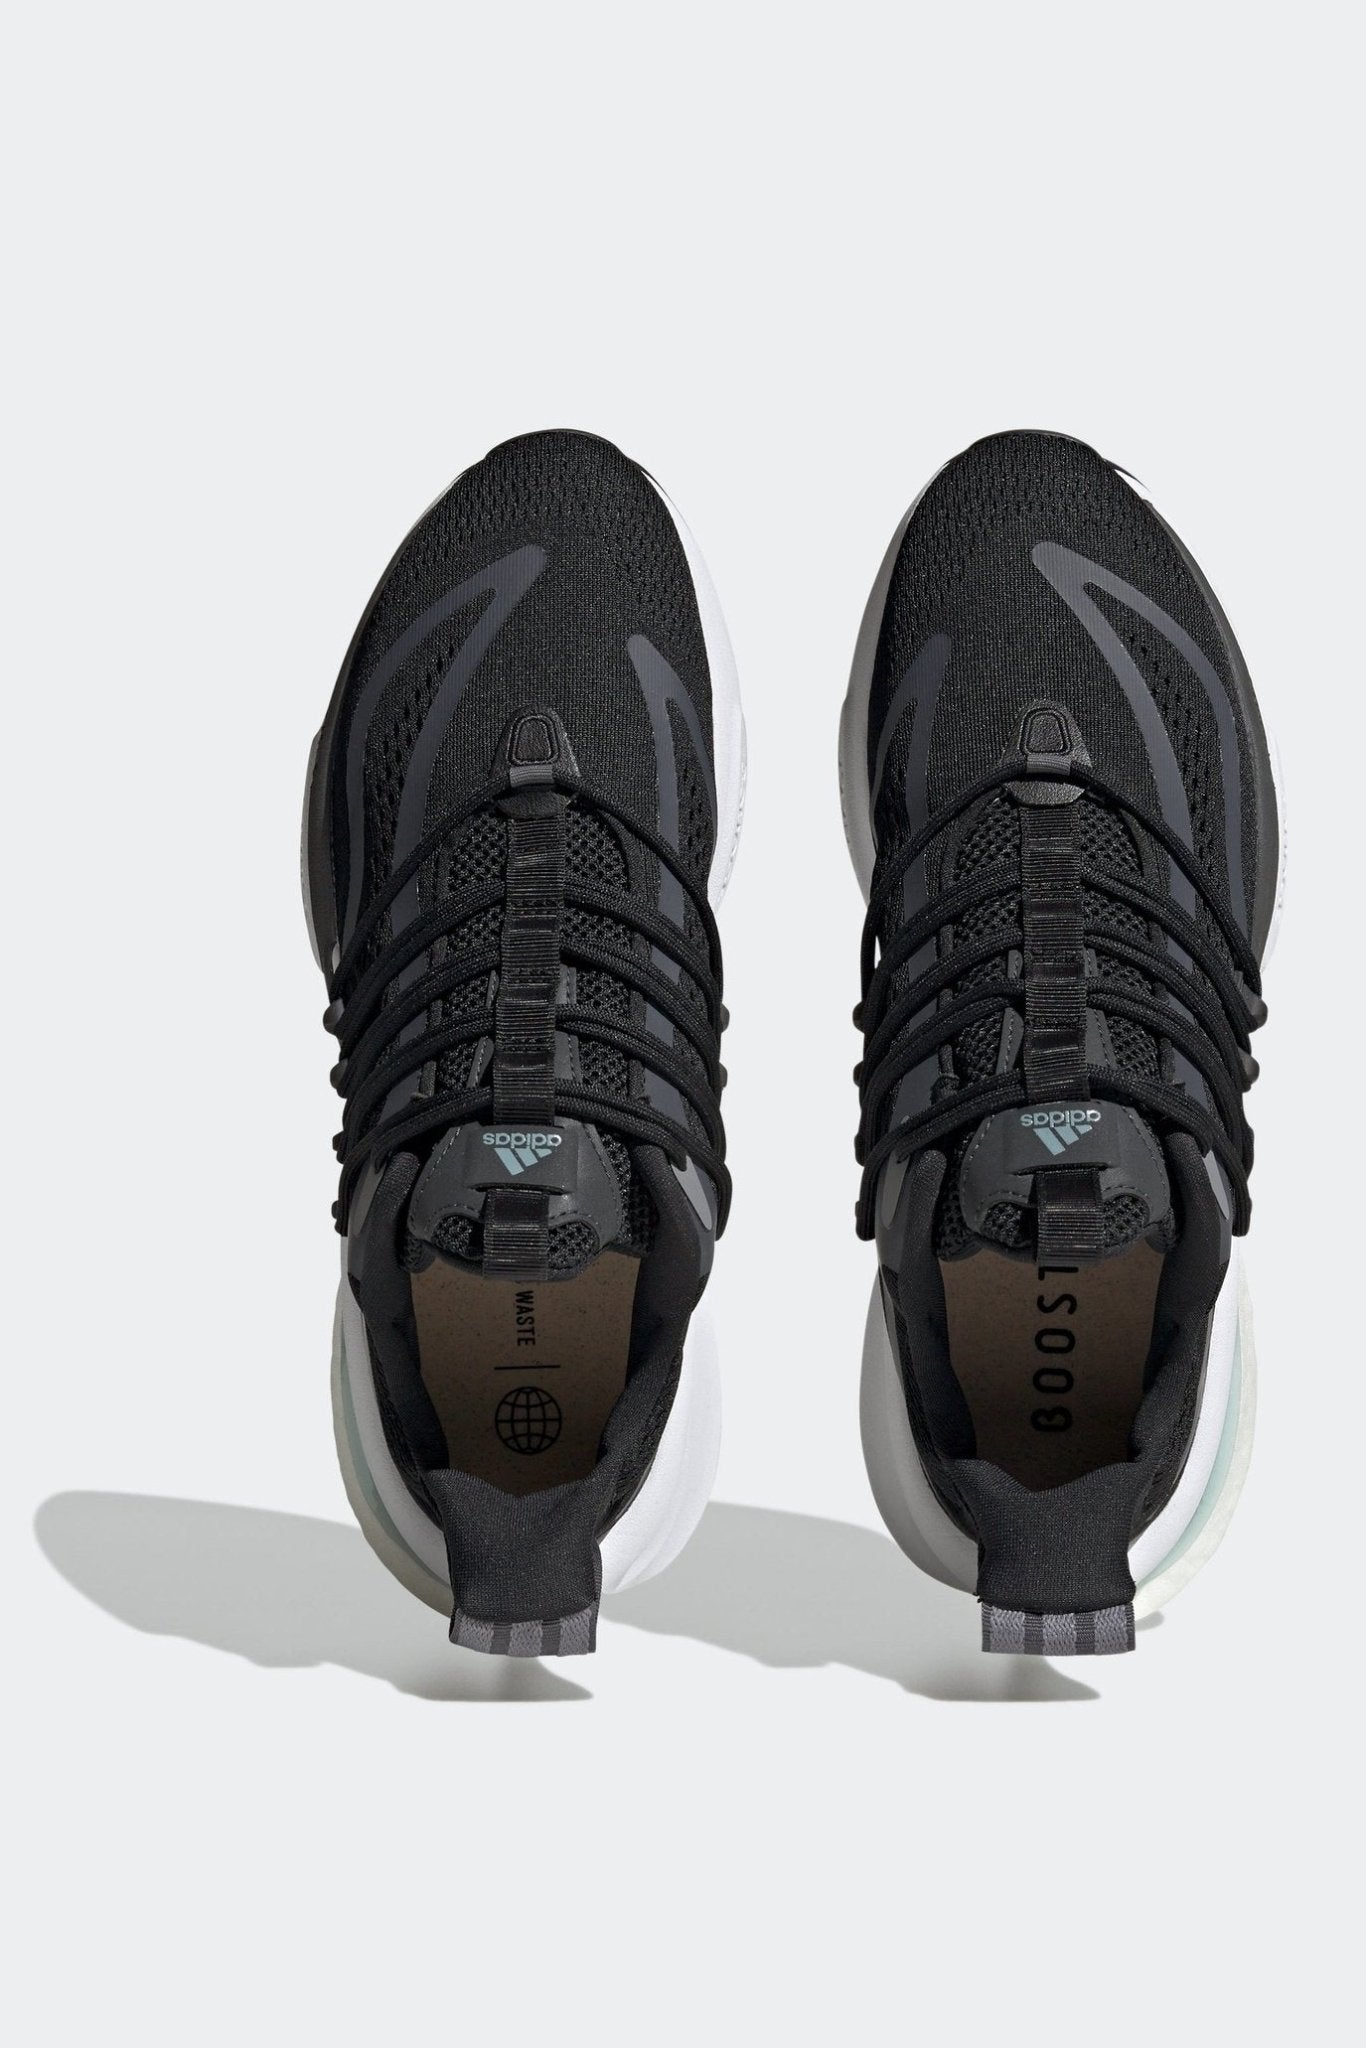 ADIDAS - נעלי ספורט לגברים ALPHABOOST V1 בצבע שחור - MASHBIR//365